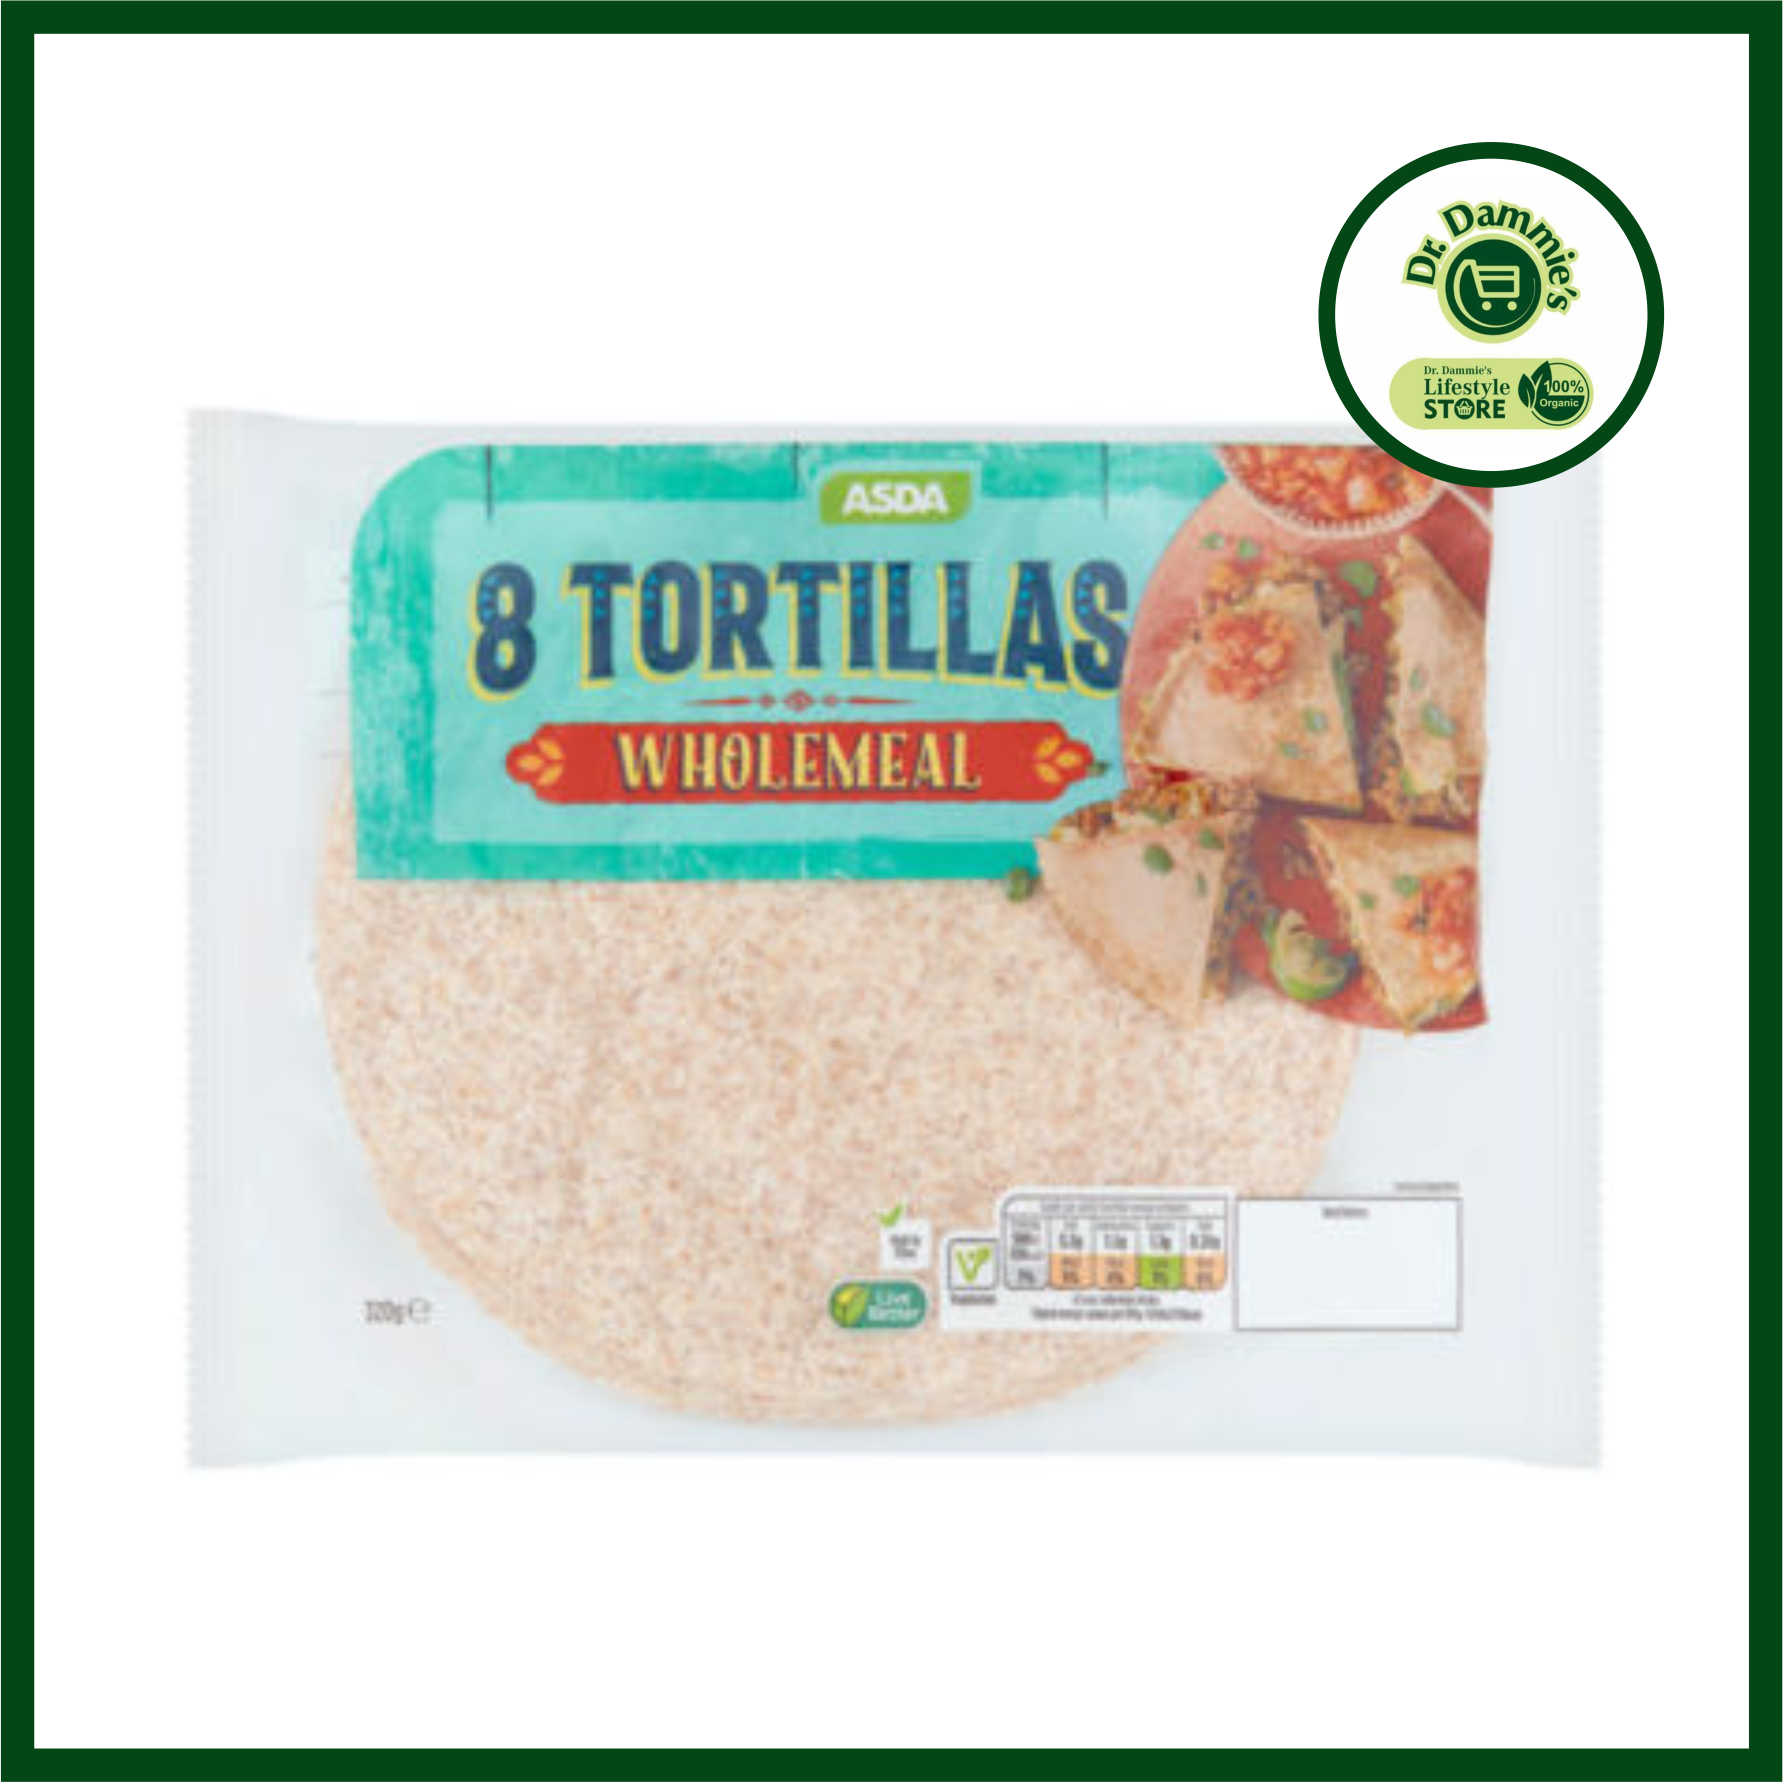 8 Tortillas wholemeal